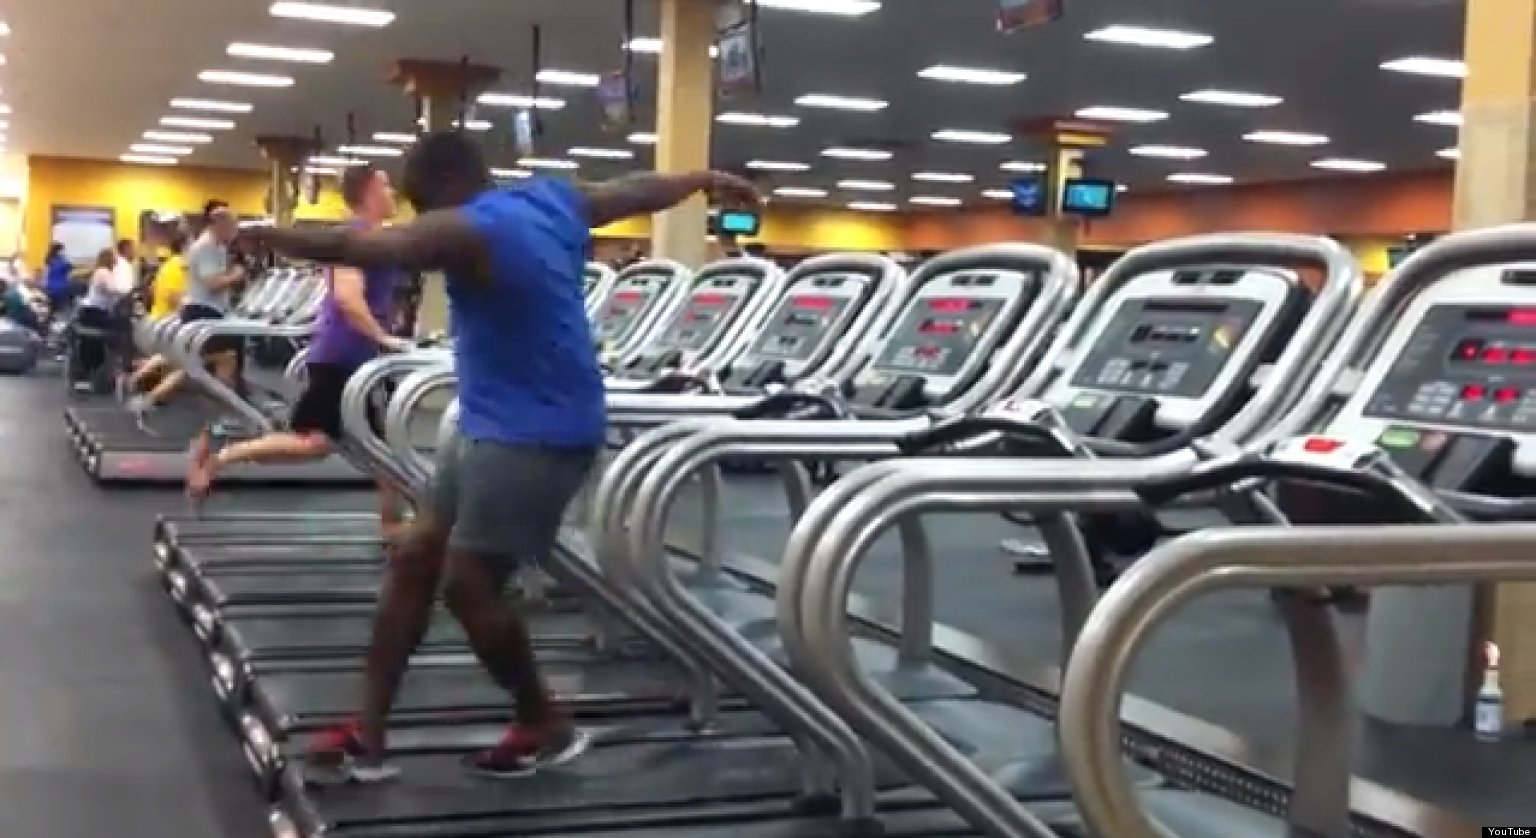 Black guy dancing on treadmill